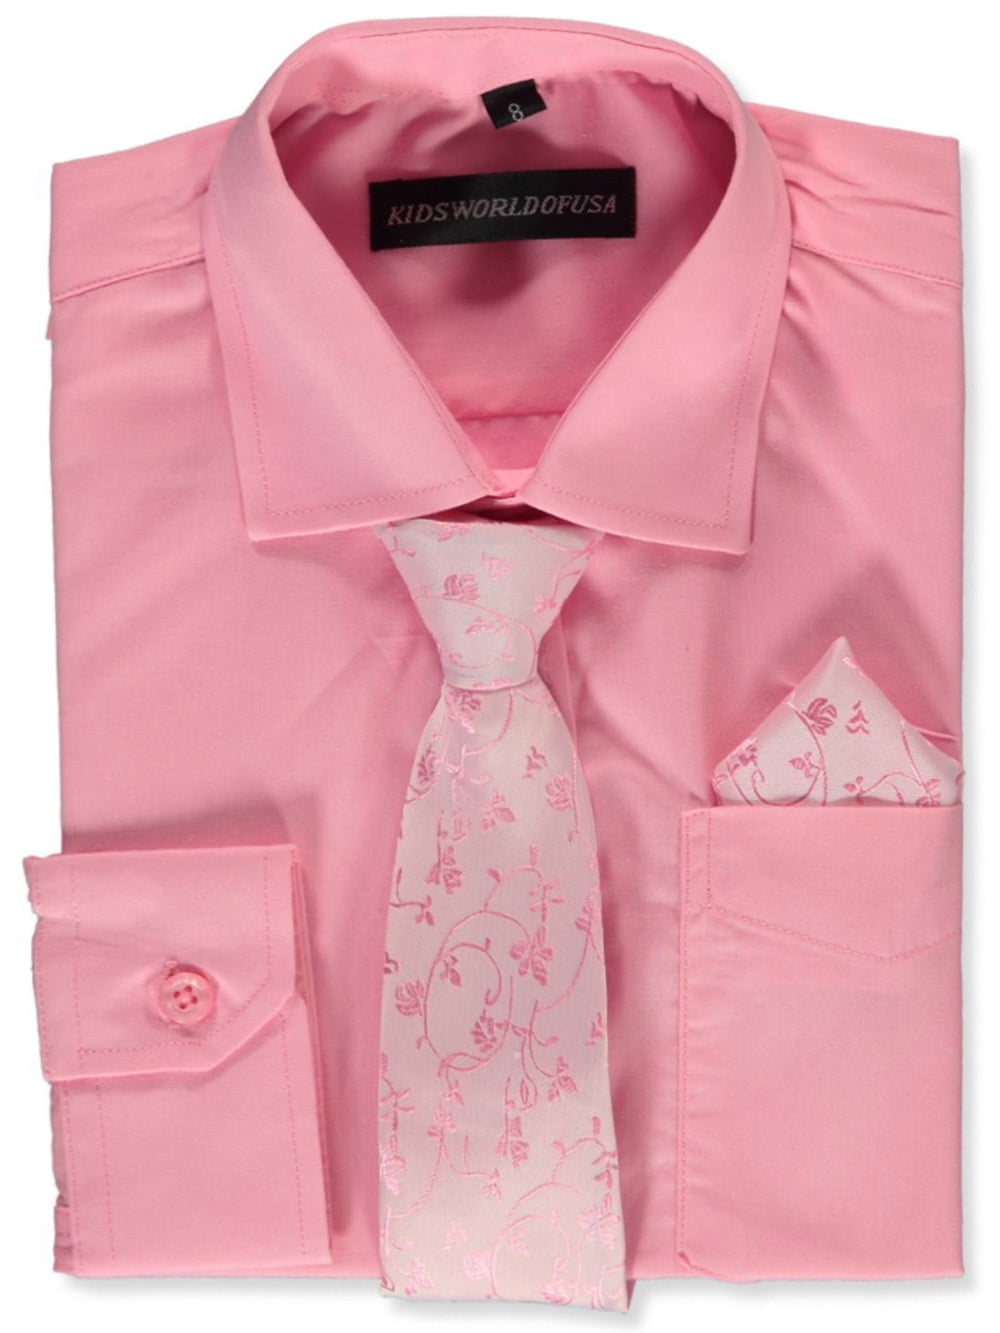 & Kids Shirt - 12 (Patterns Boys\' May Tie (Big Vary) Boys) World Dress rose,